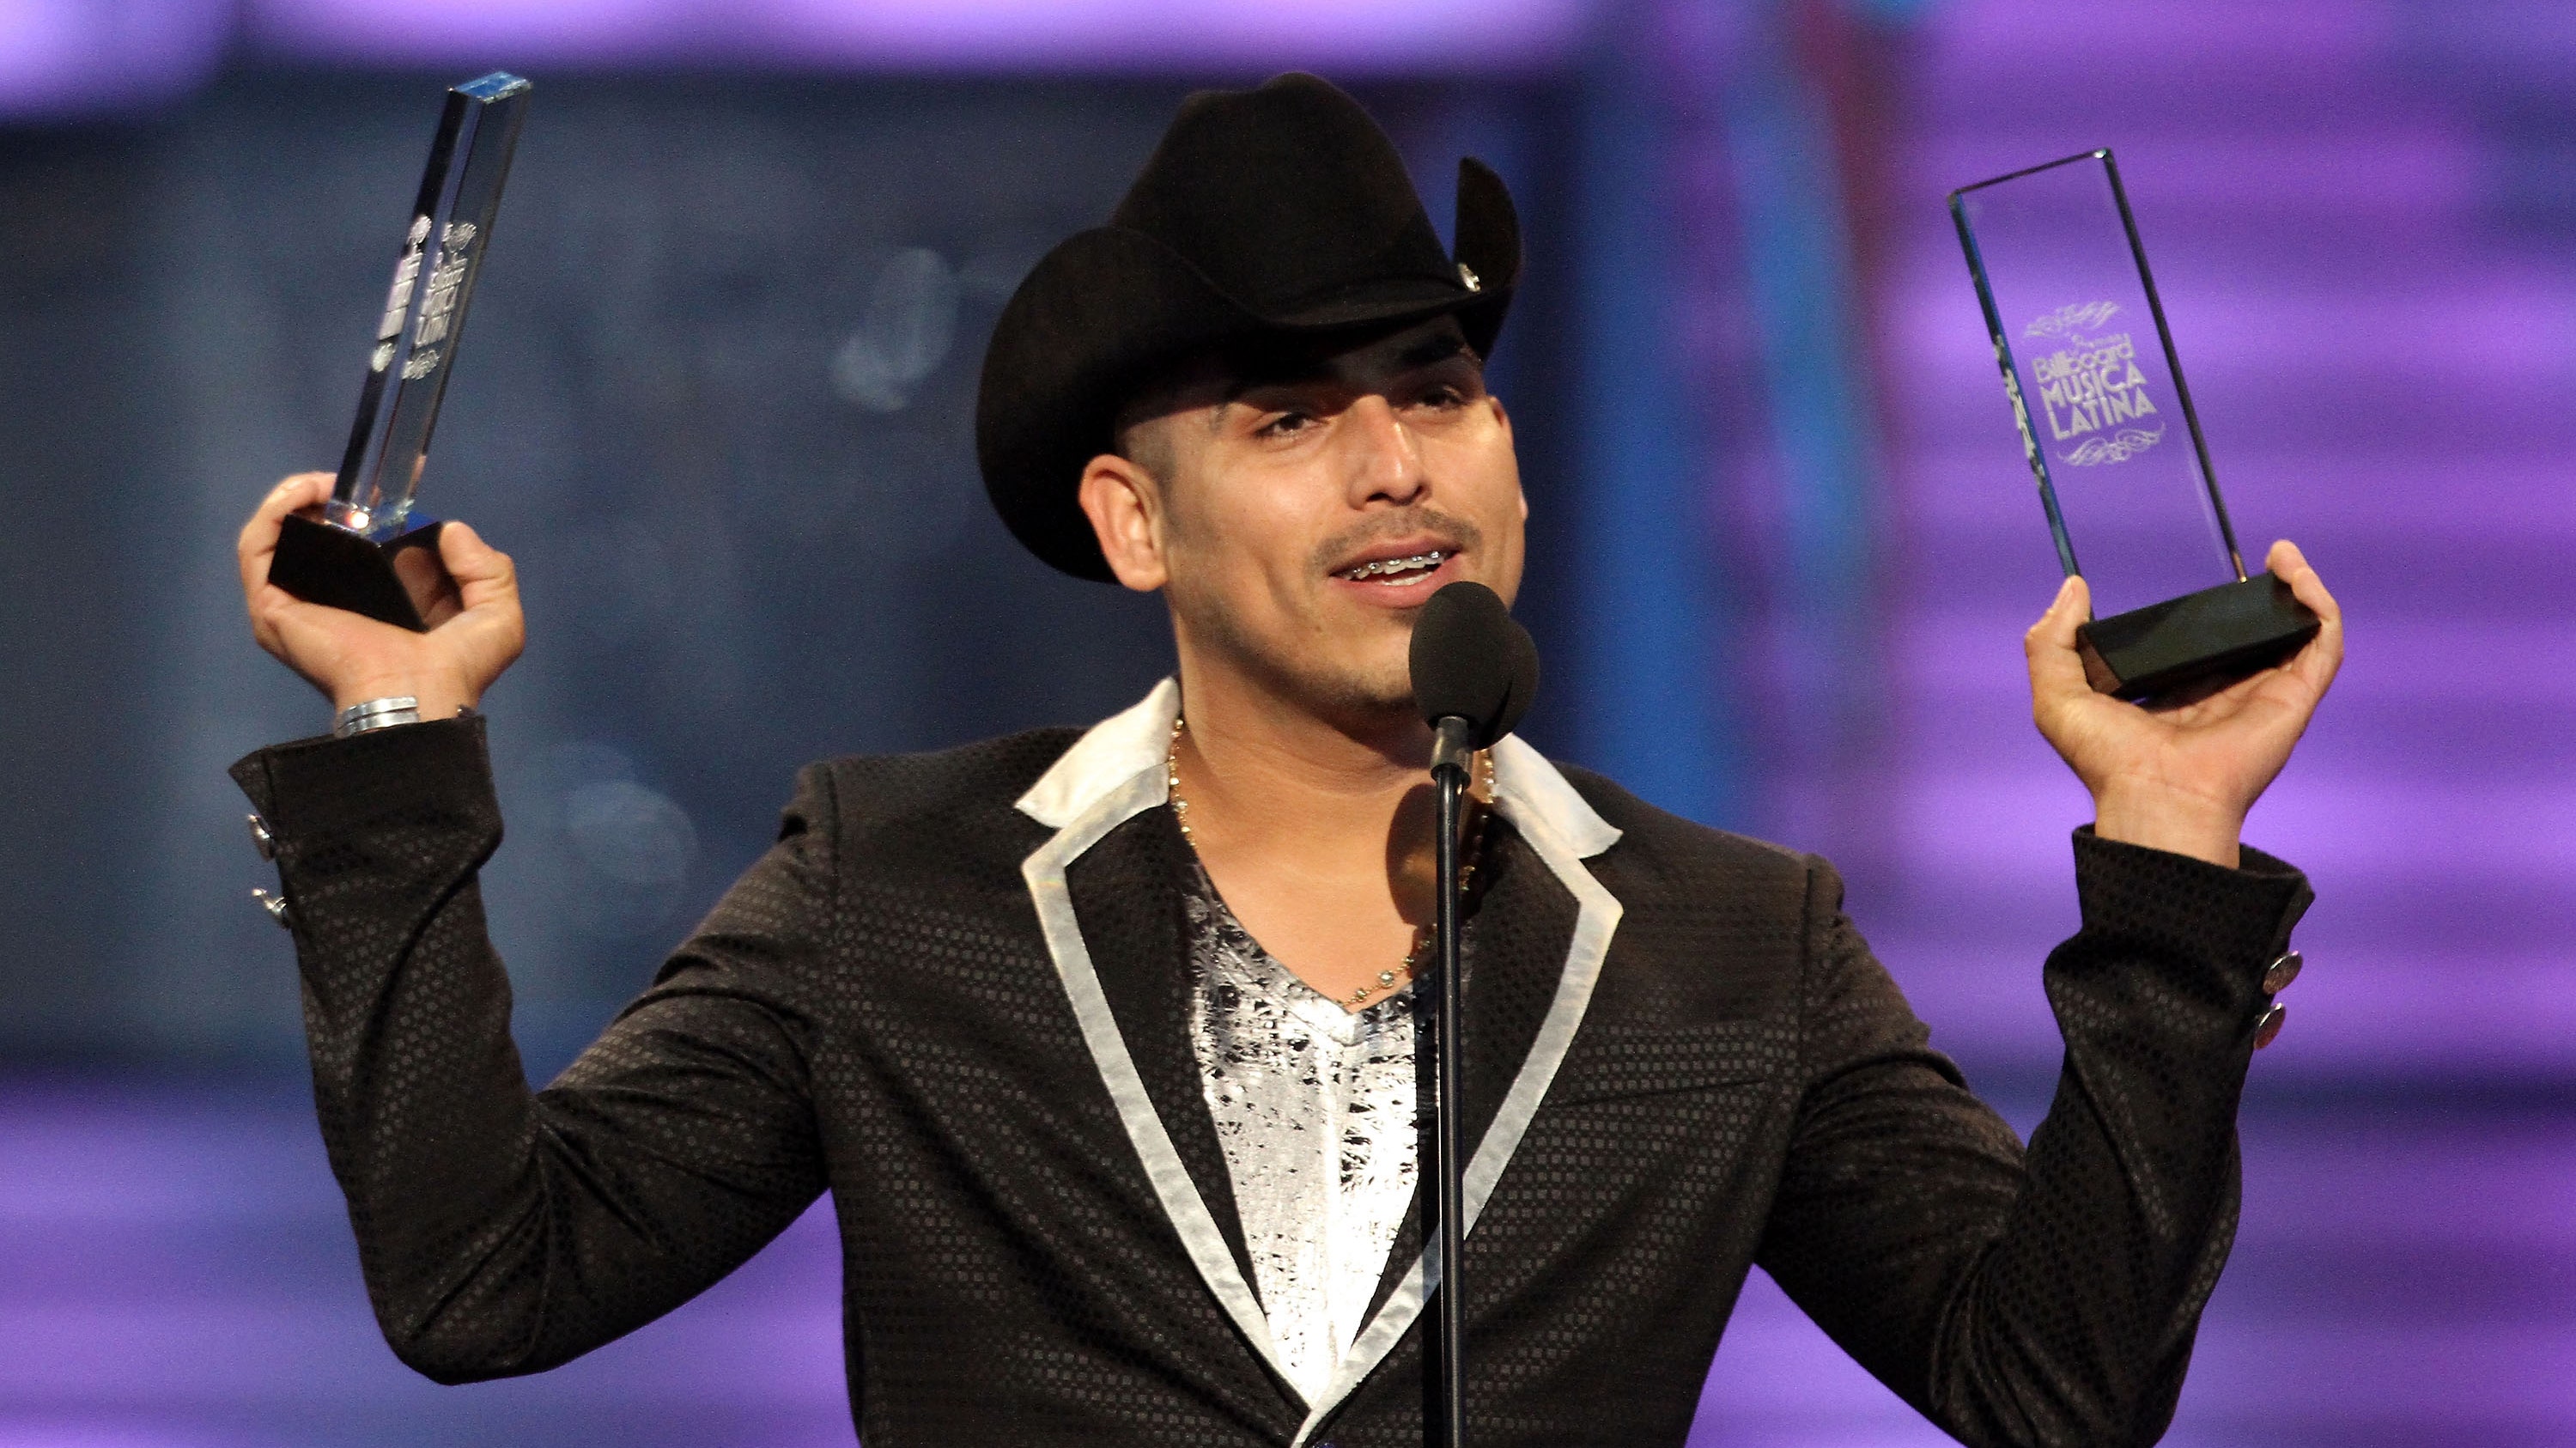 Mexican Music Star, Espinoza Paz Why is He Retiring? Fox News